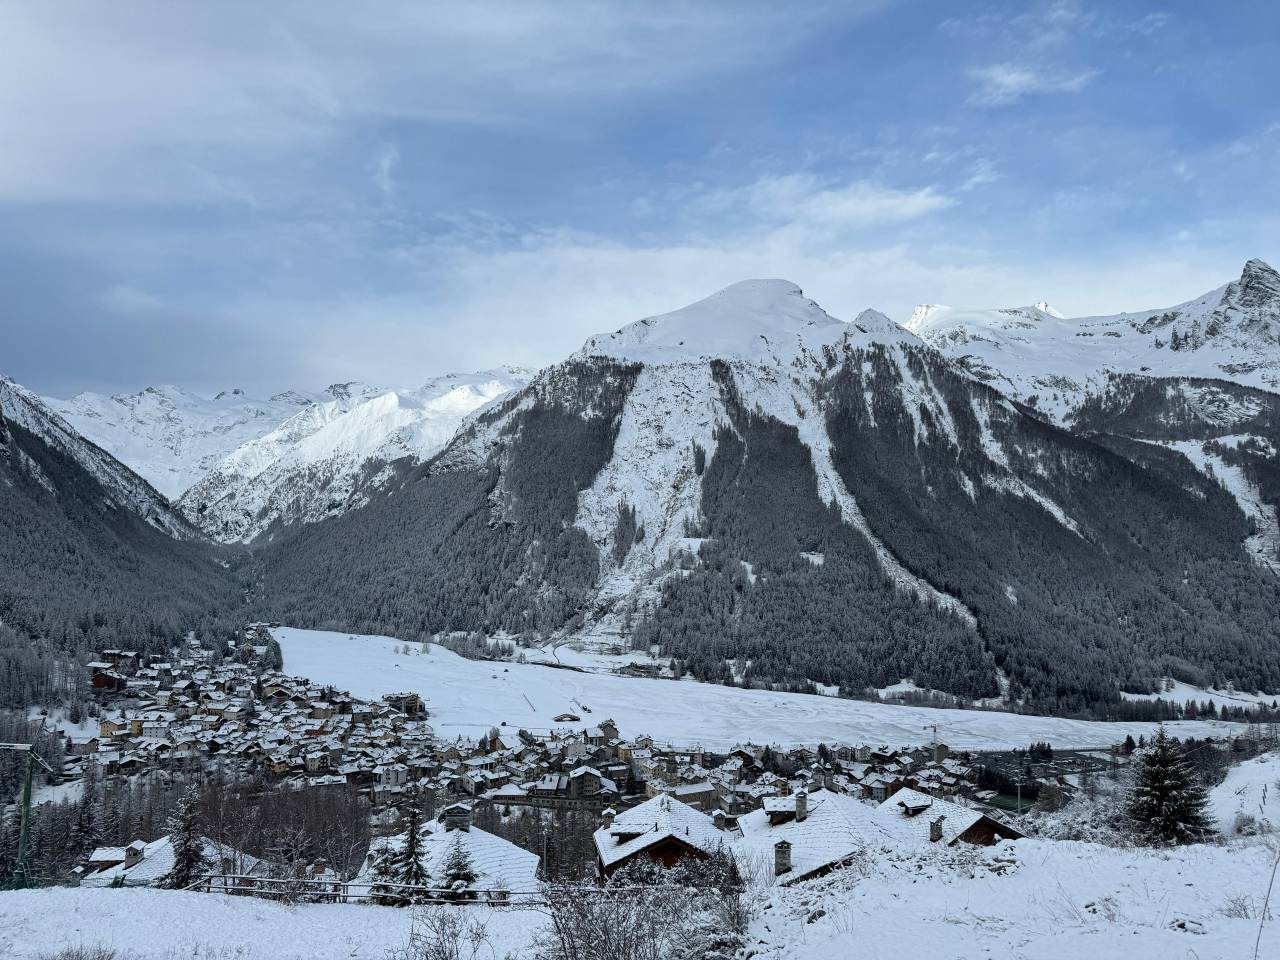 Cronaca meteo. Torna la neve sulle Alpi